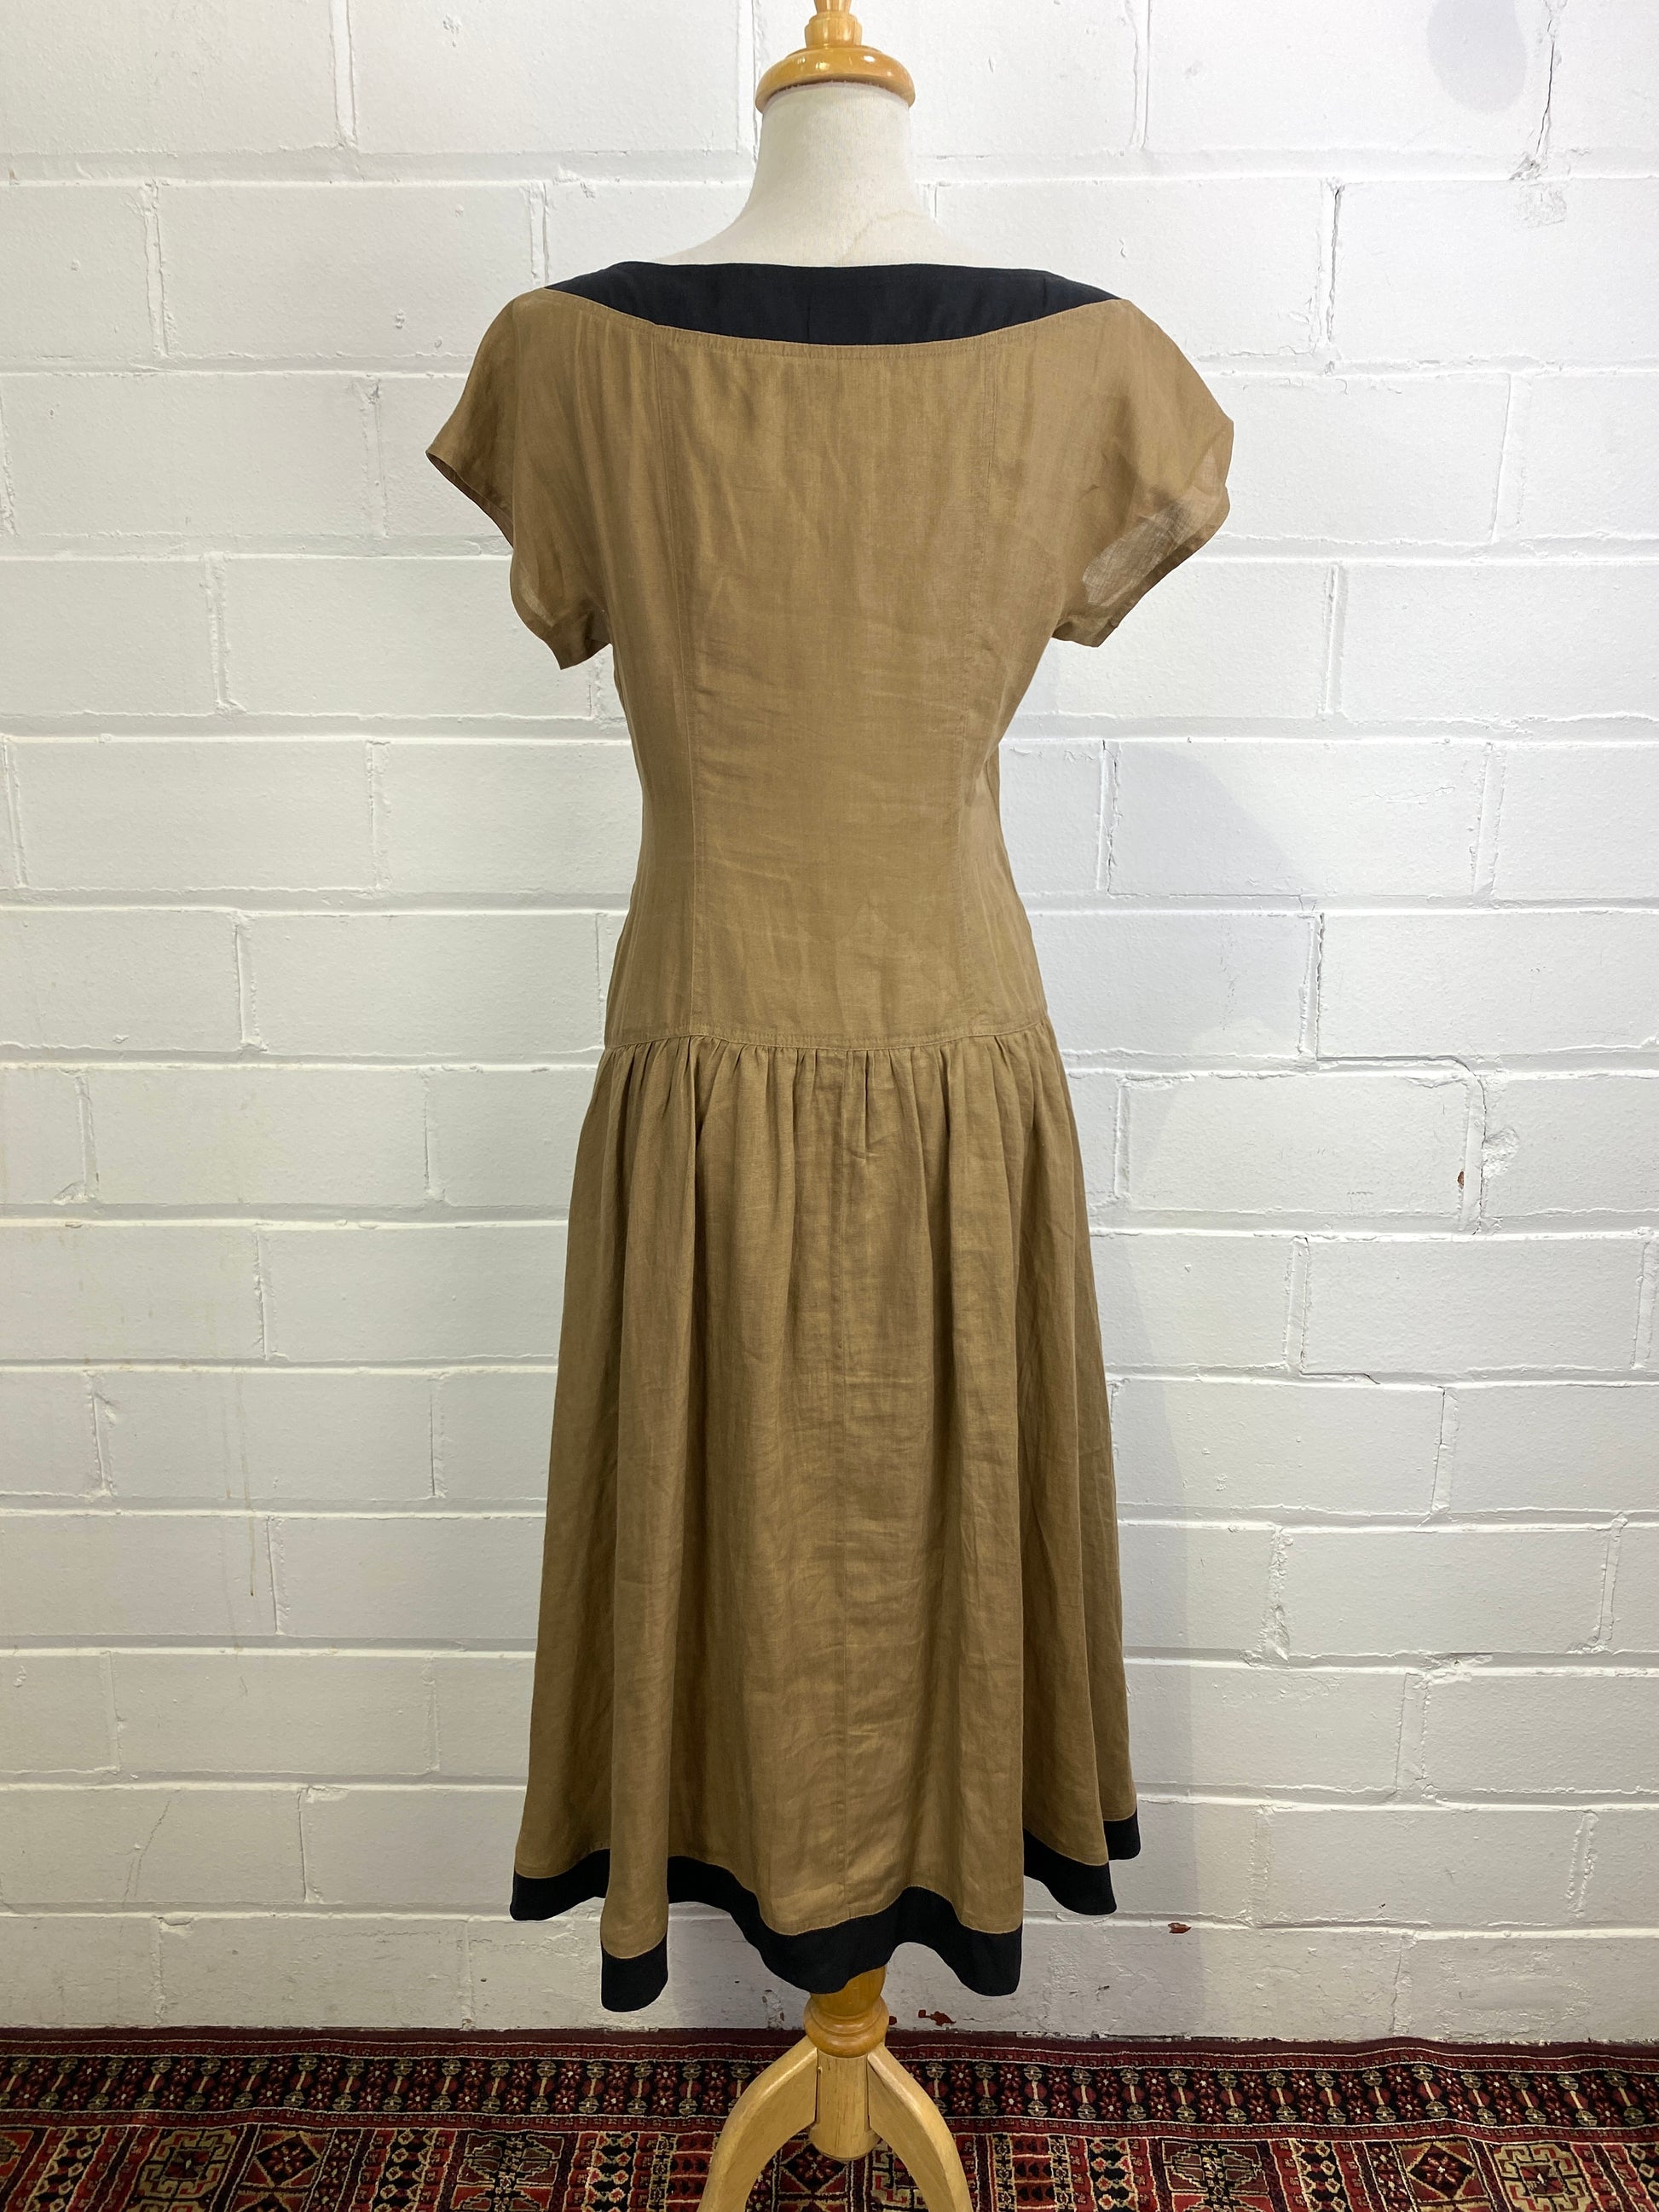 Vintage 1980s Brown Linen Mariella Burani Dress, Small